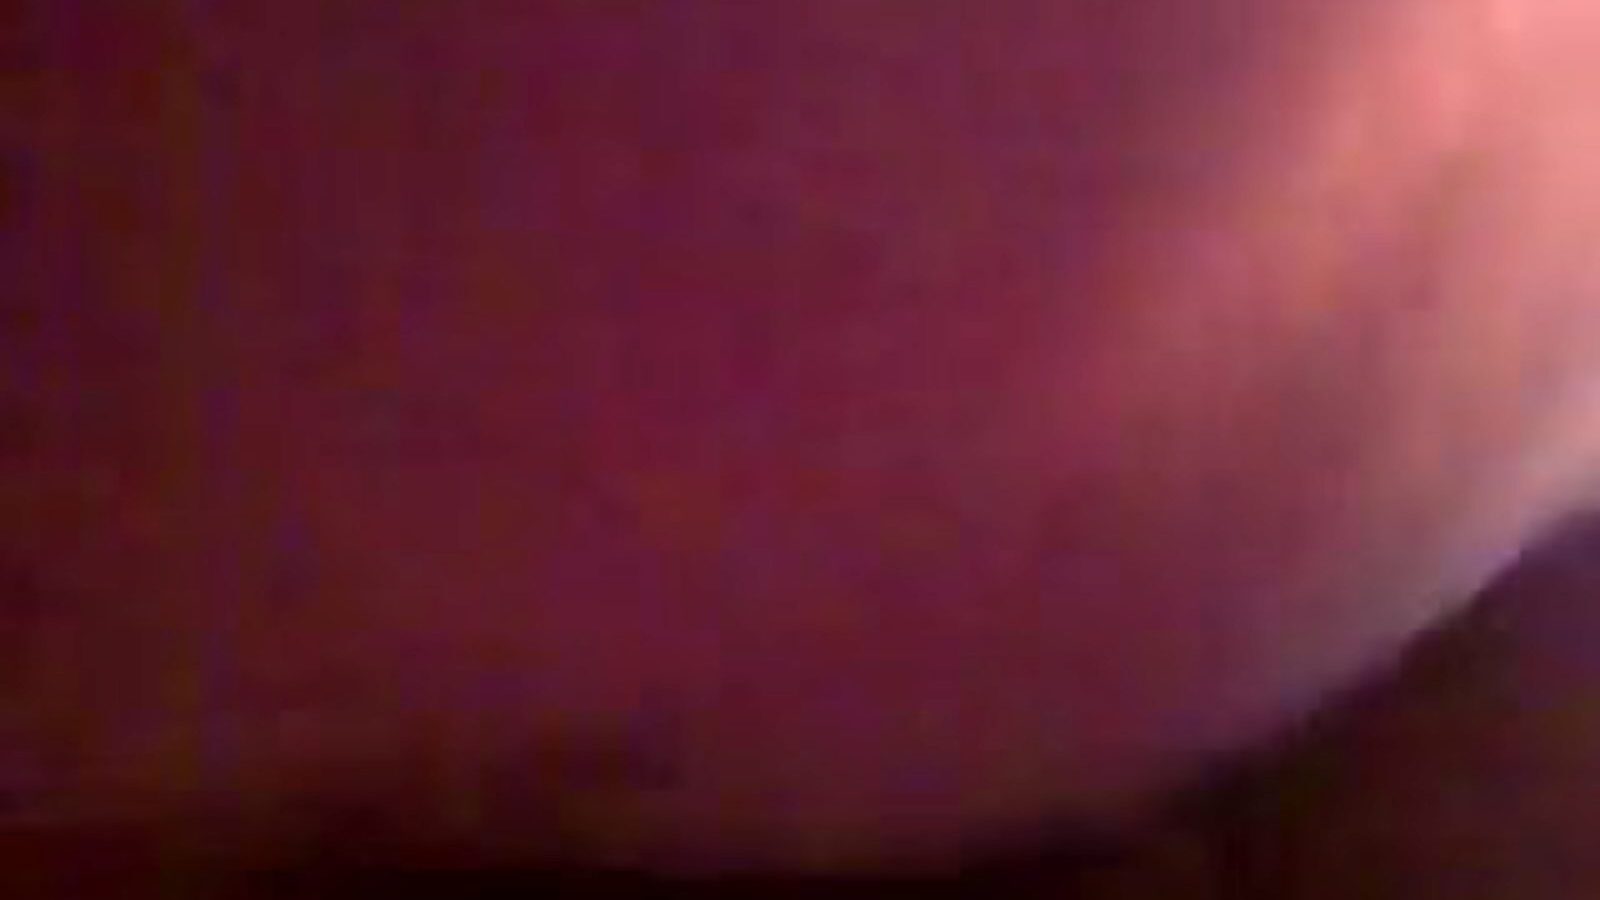 une explosion de joissance, free porn of pussy pussy 3c צפה ב- une explosion de jouissance clip on xhamster, אתר הצינור הגדול ביותר של פאקינג-פאקינג עם טונות של סרטי פורנוגרפיה אסייתית צרפתית וכוסית בחינם